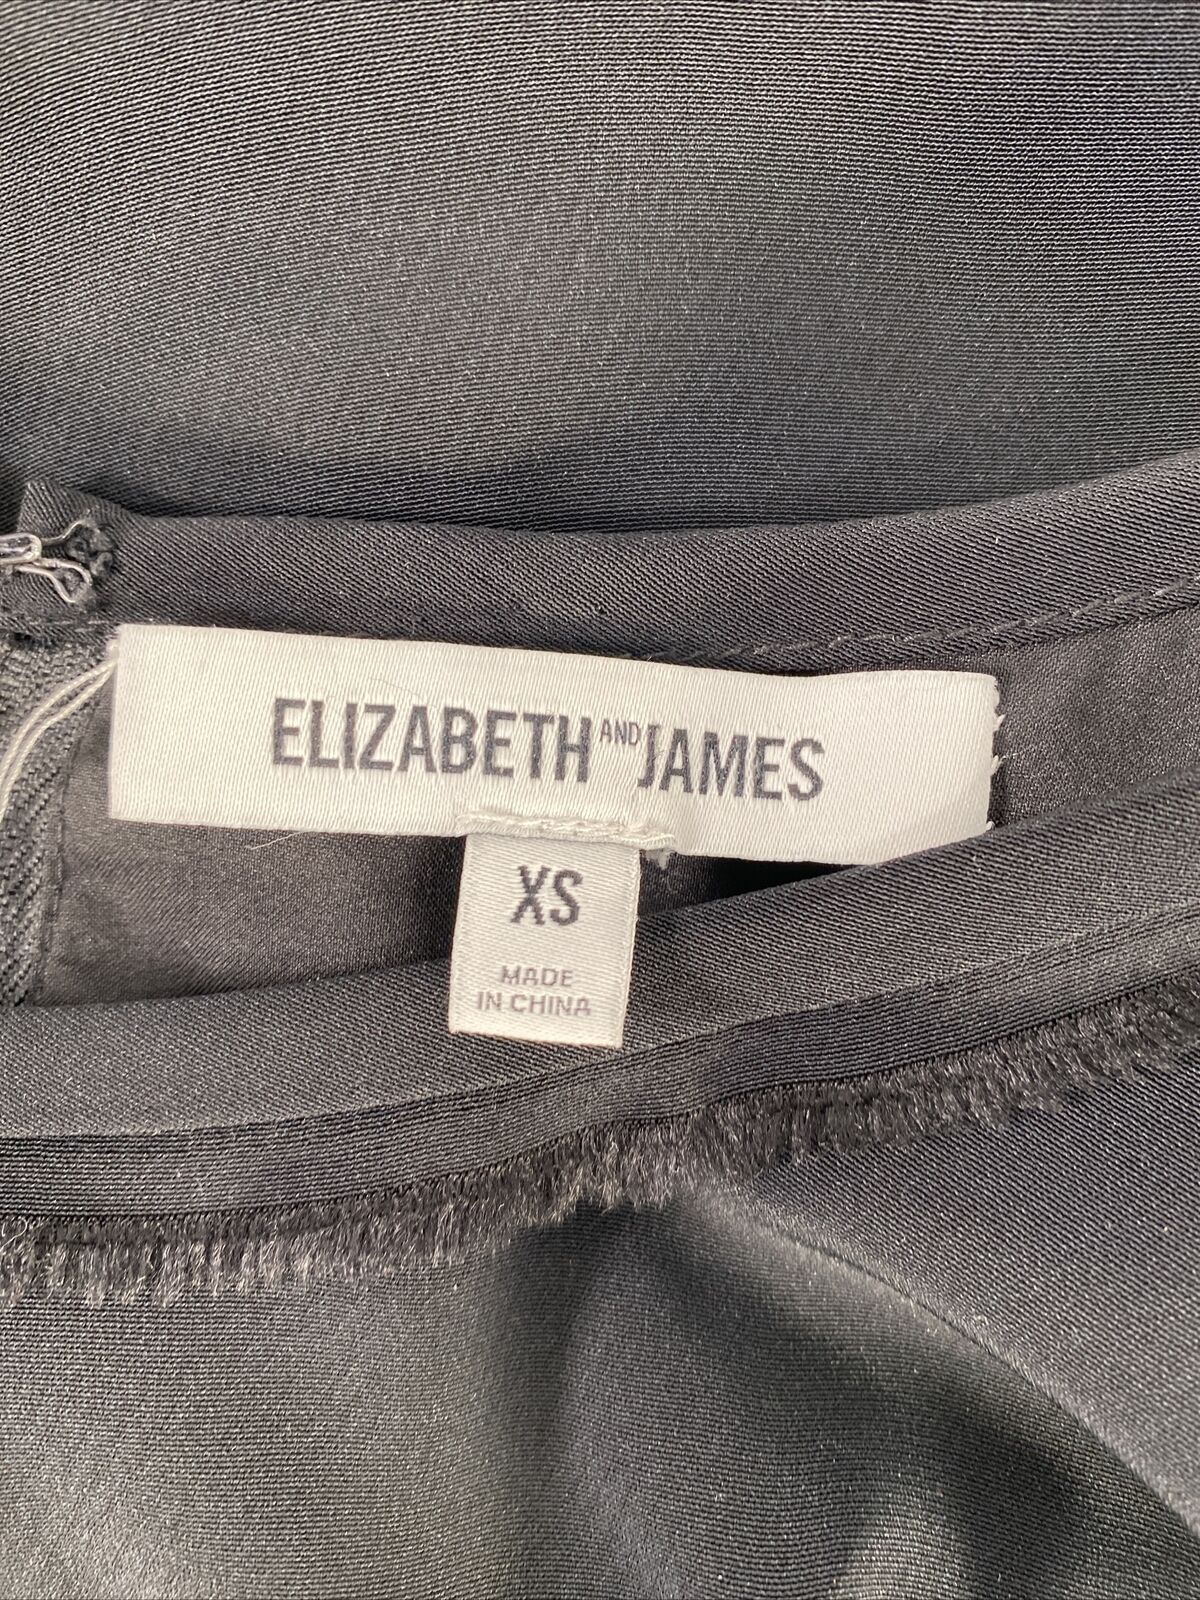 Elizabeth & James Women's Black Cap Sleeve Lined Sheer Blouse Top - XS